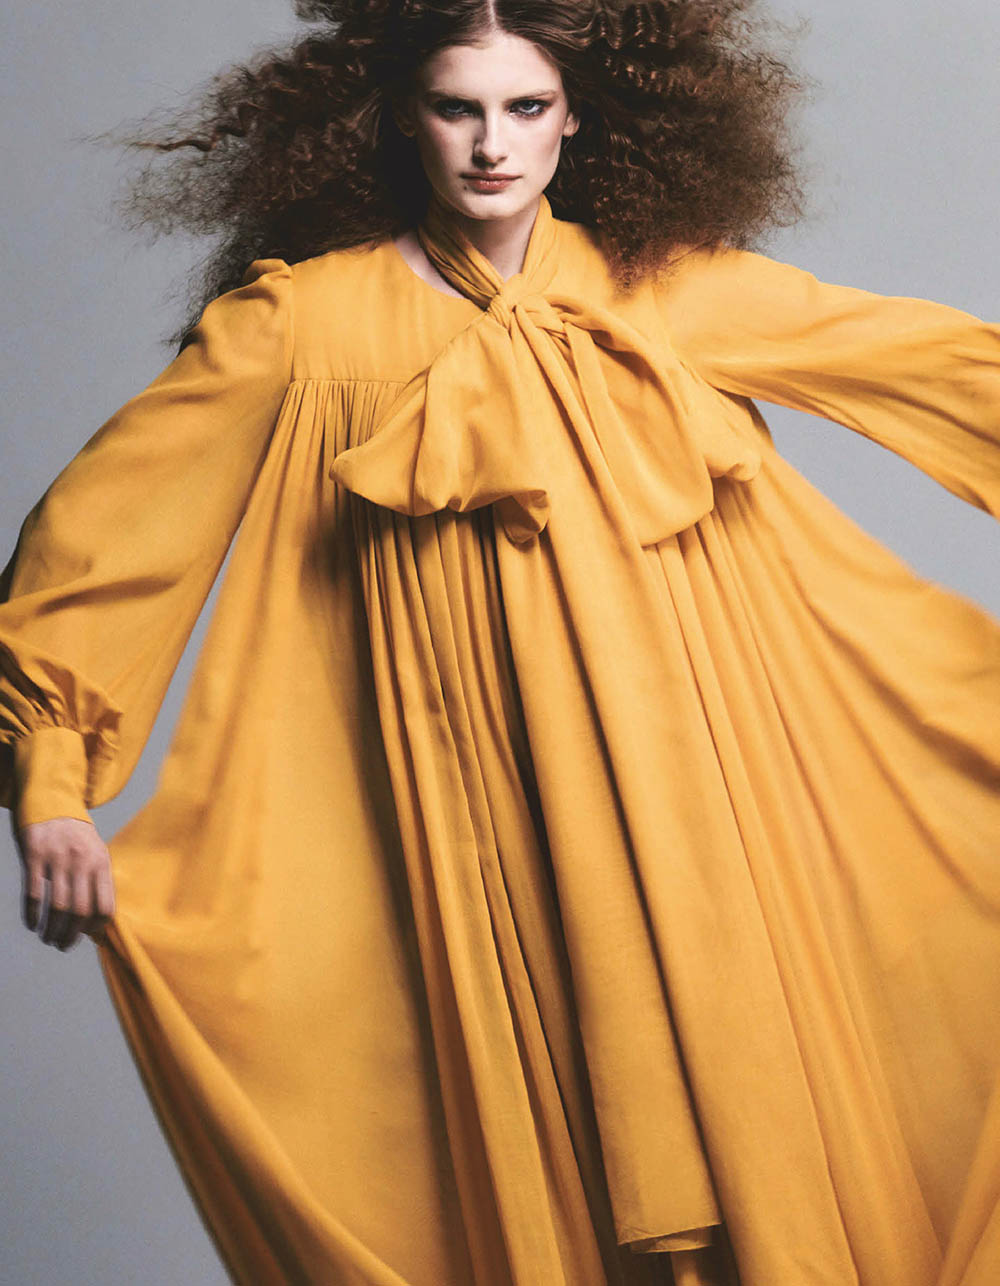 Signe Veiteberg by Chris Colls for Vogue Japan April 2020